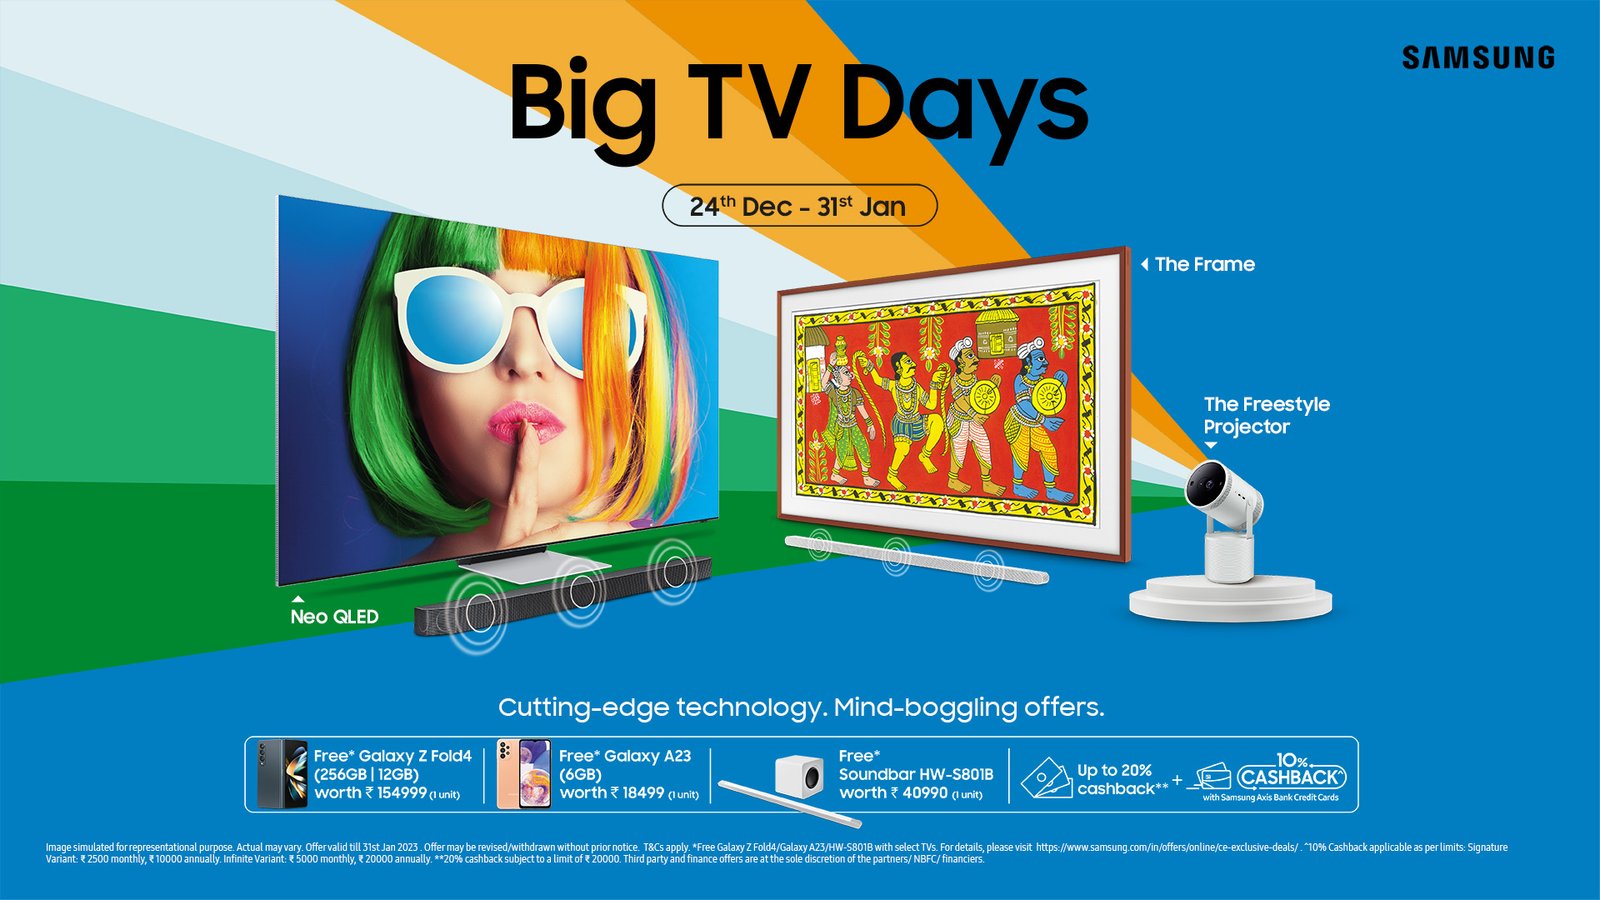 Samsung Big TV Days